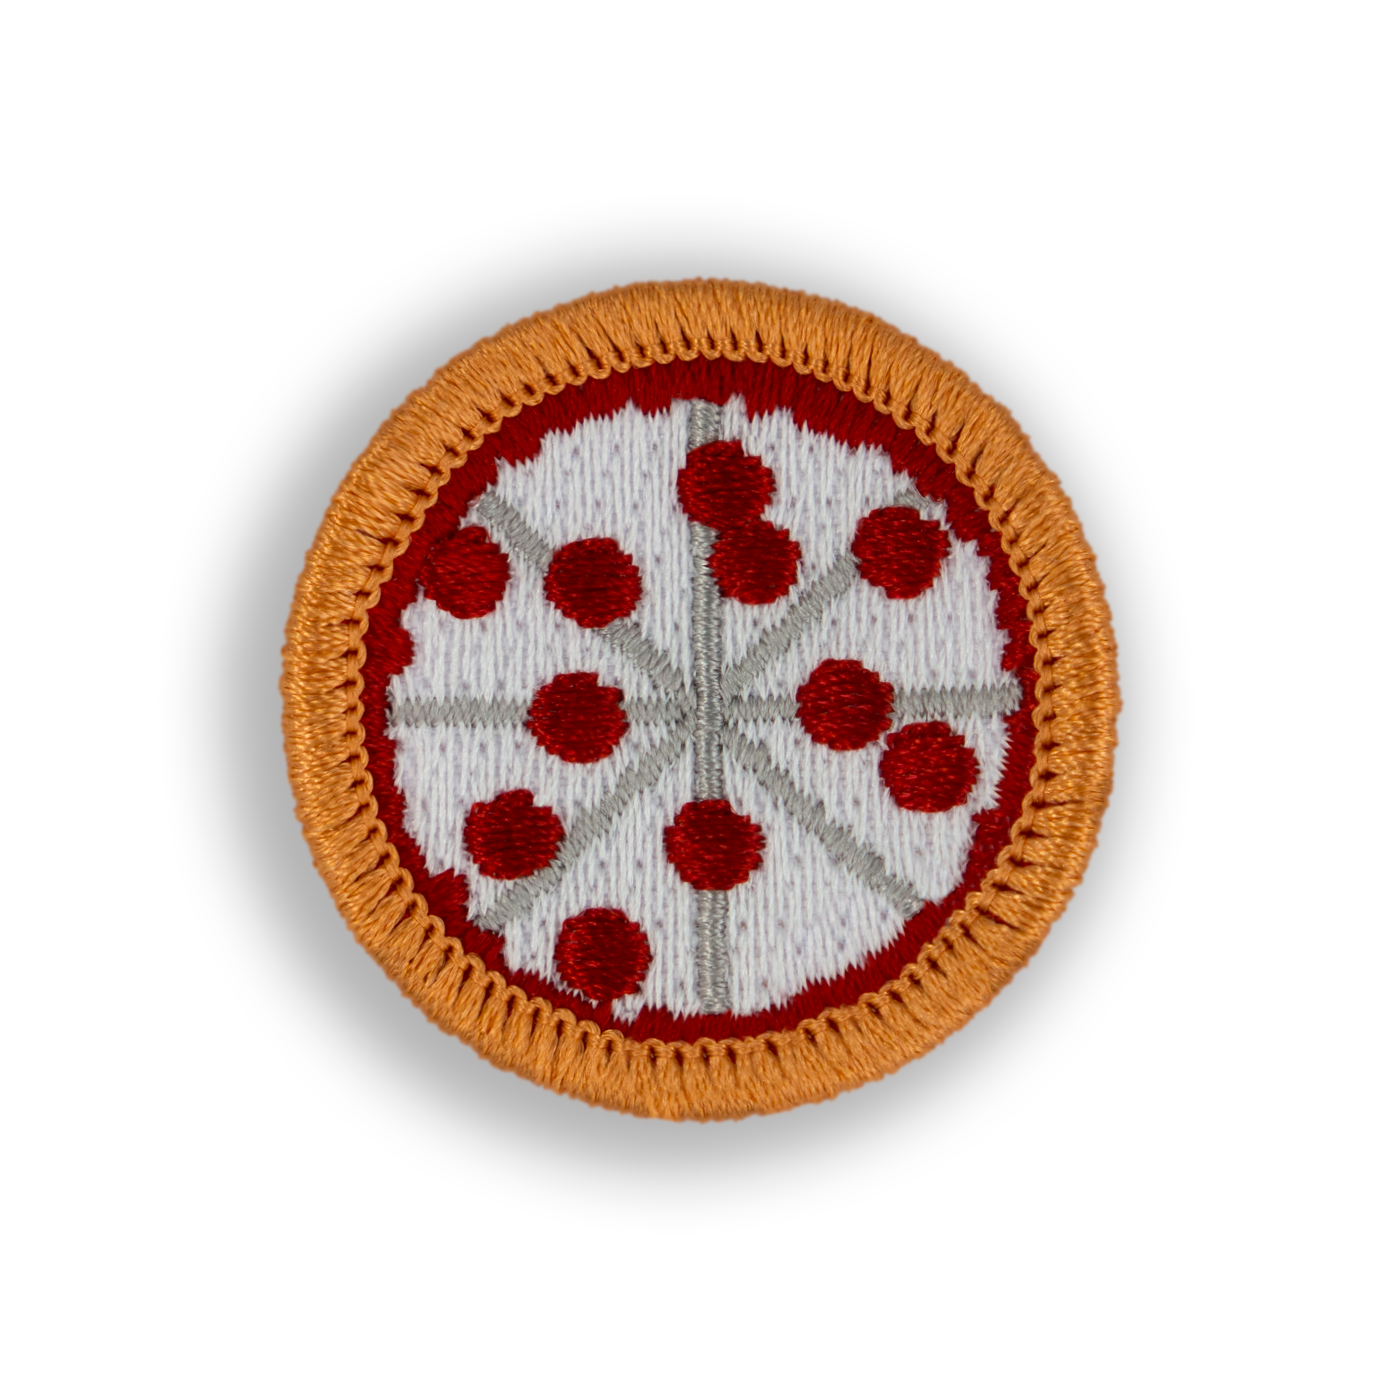 Pizza Patch | Demerit Wear - Fake Merit Badges